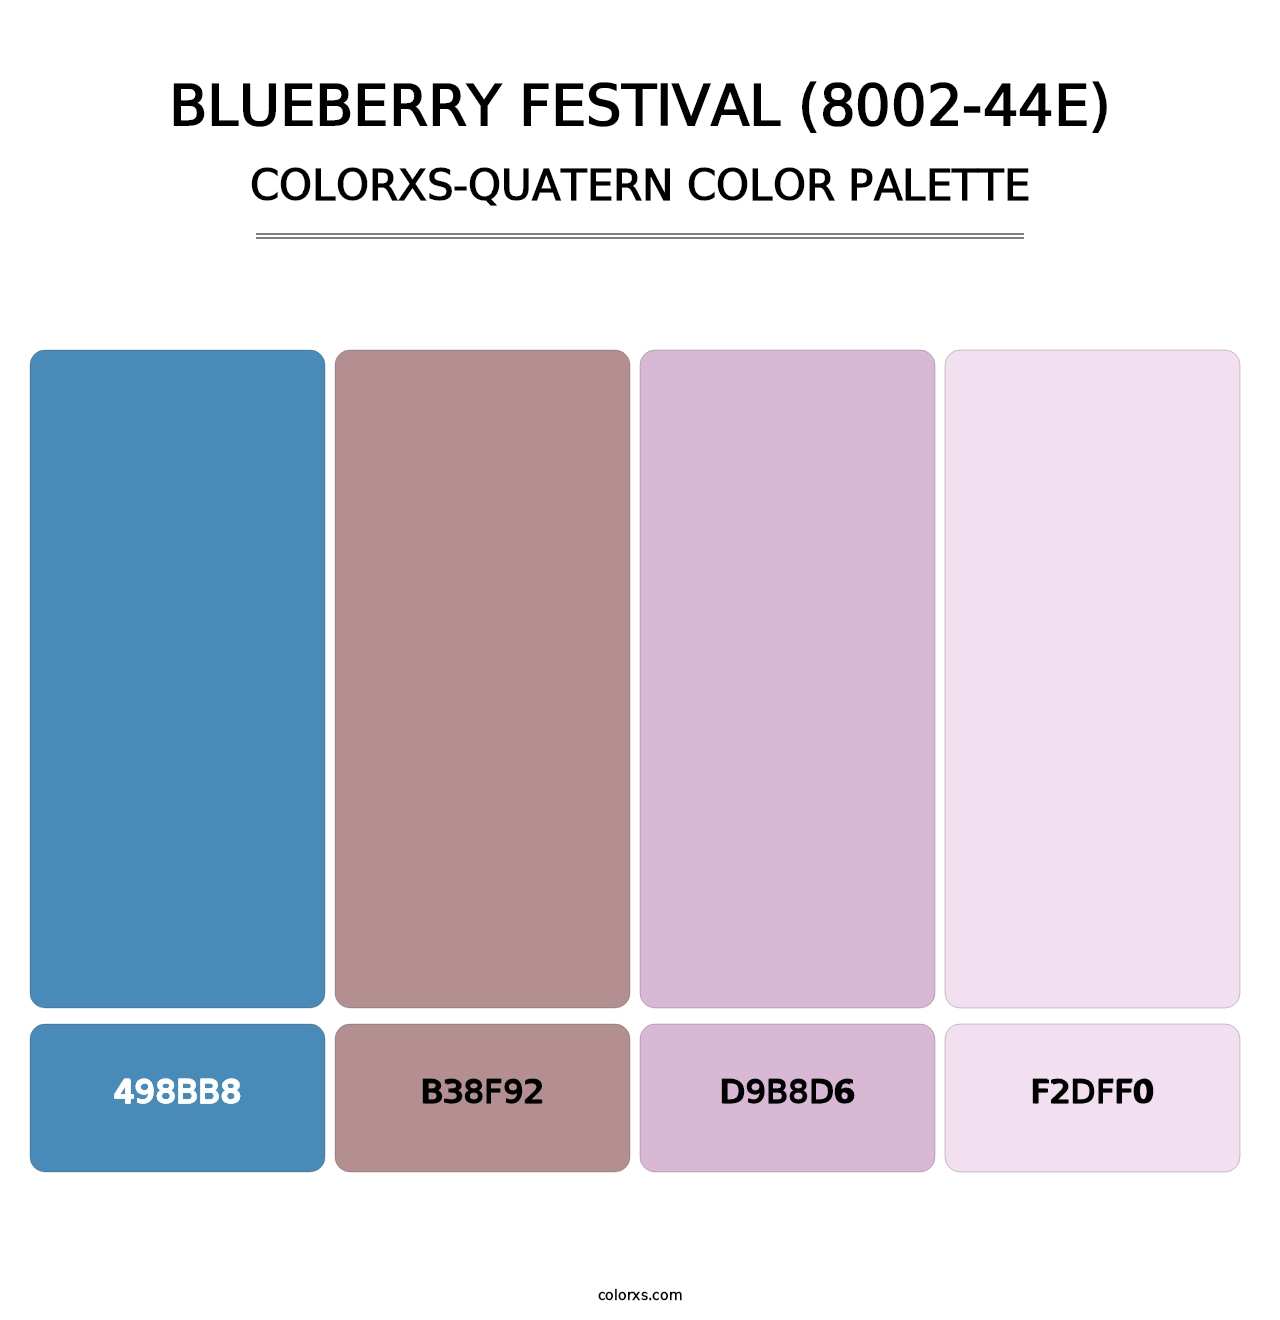 Blueberry Festival (8002-44E) - Colorxs Quatern Palette